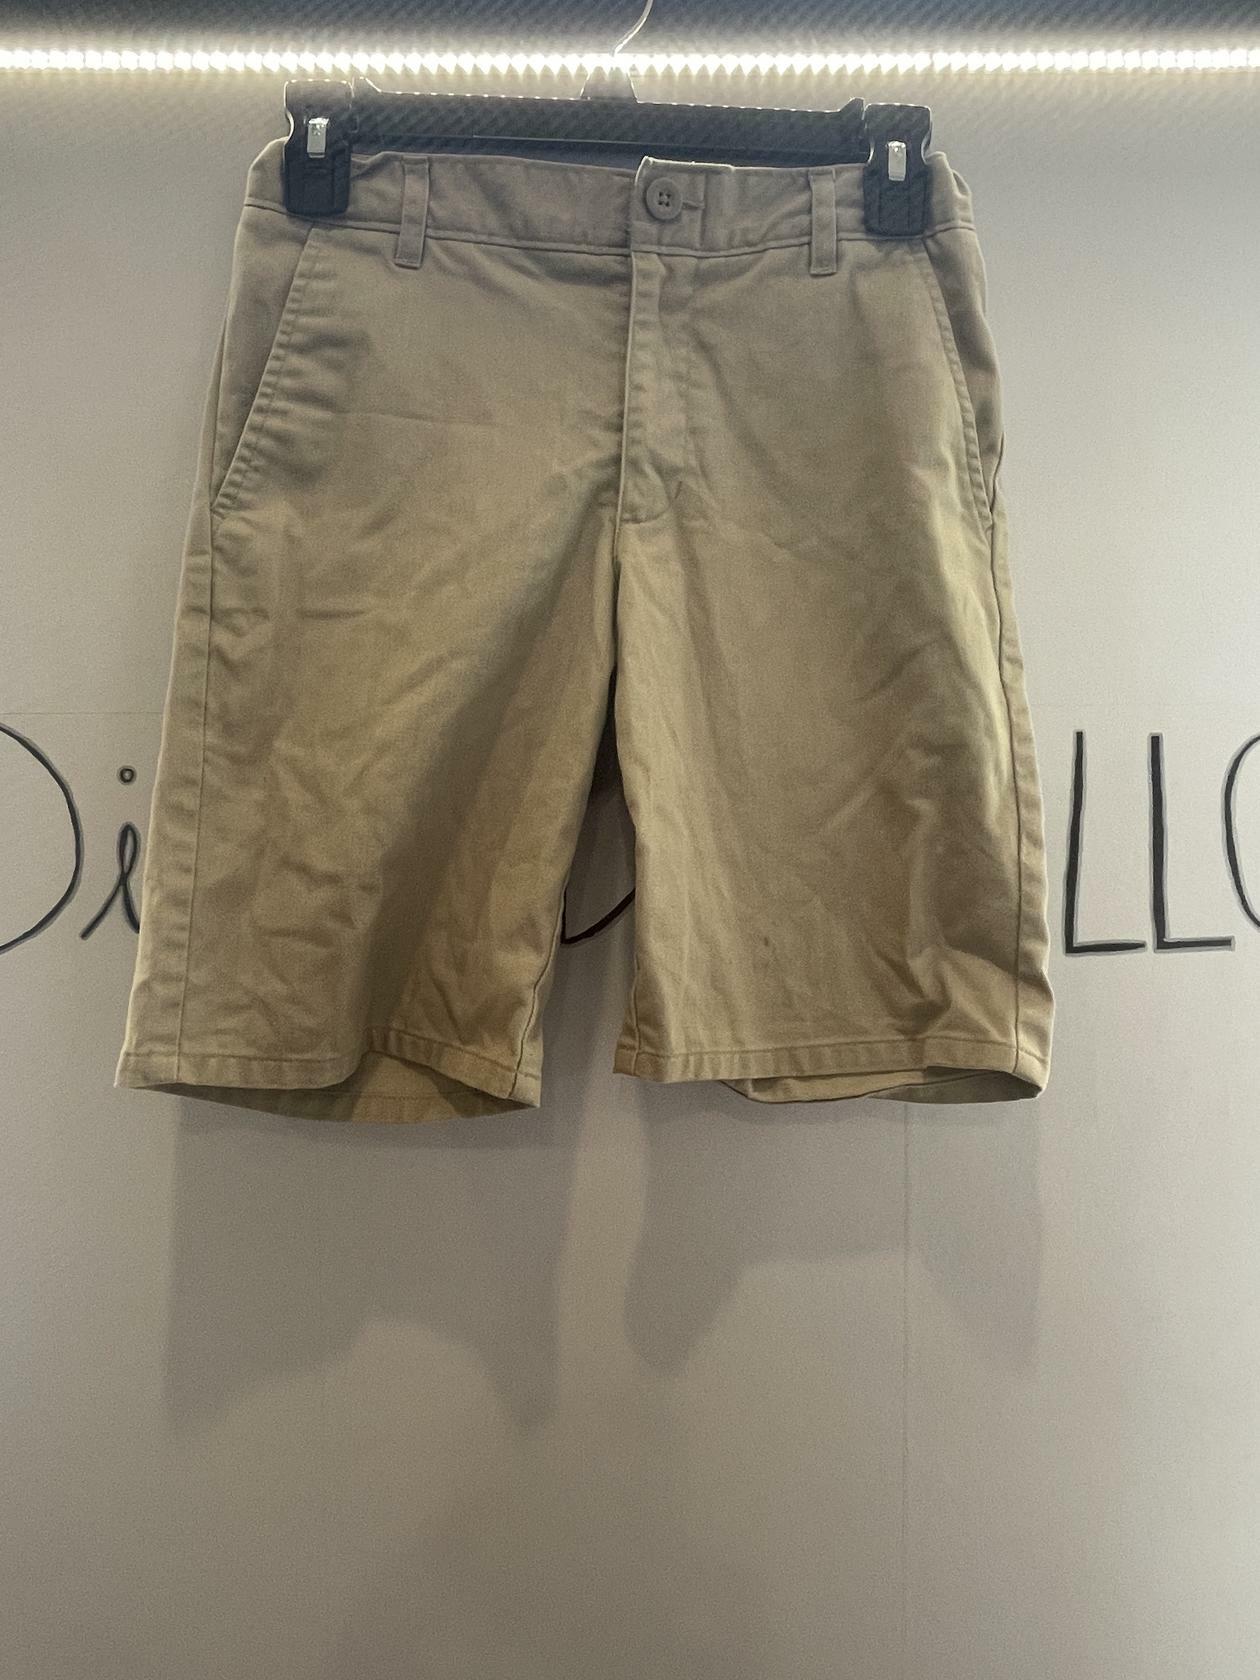 Nautica Boys Shorts Size 10 Khaki Tan - Very Good